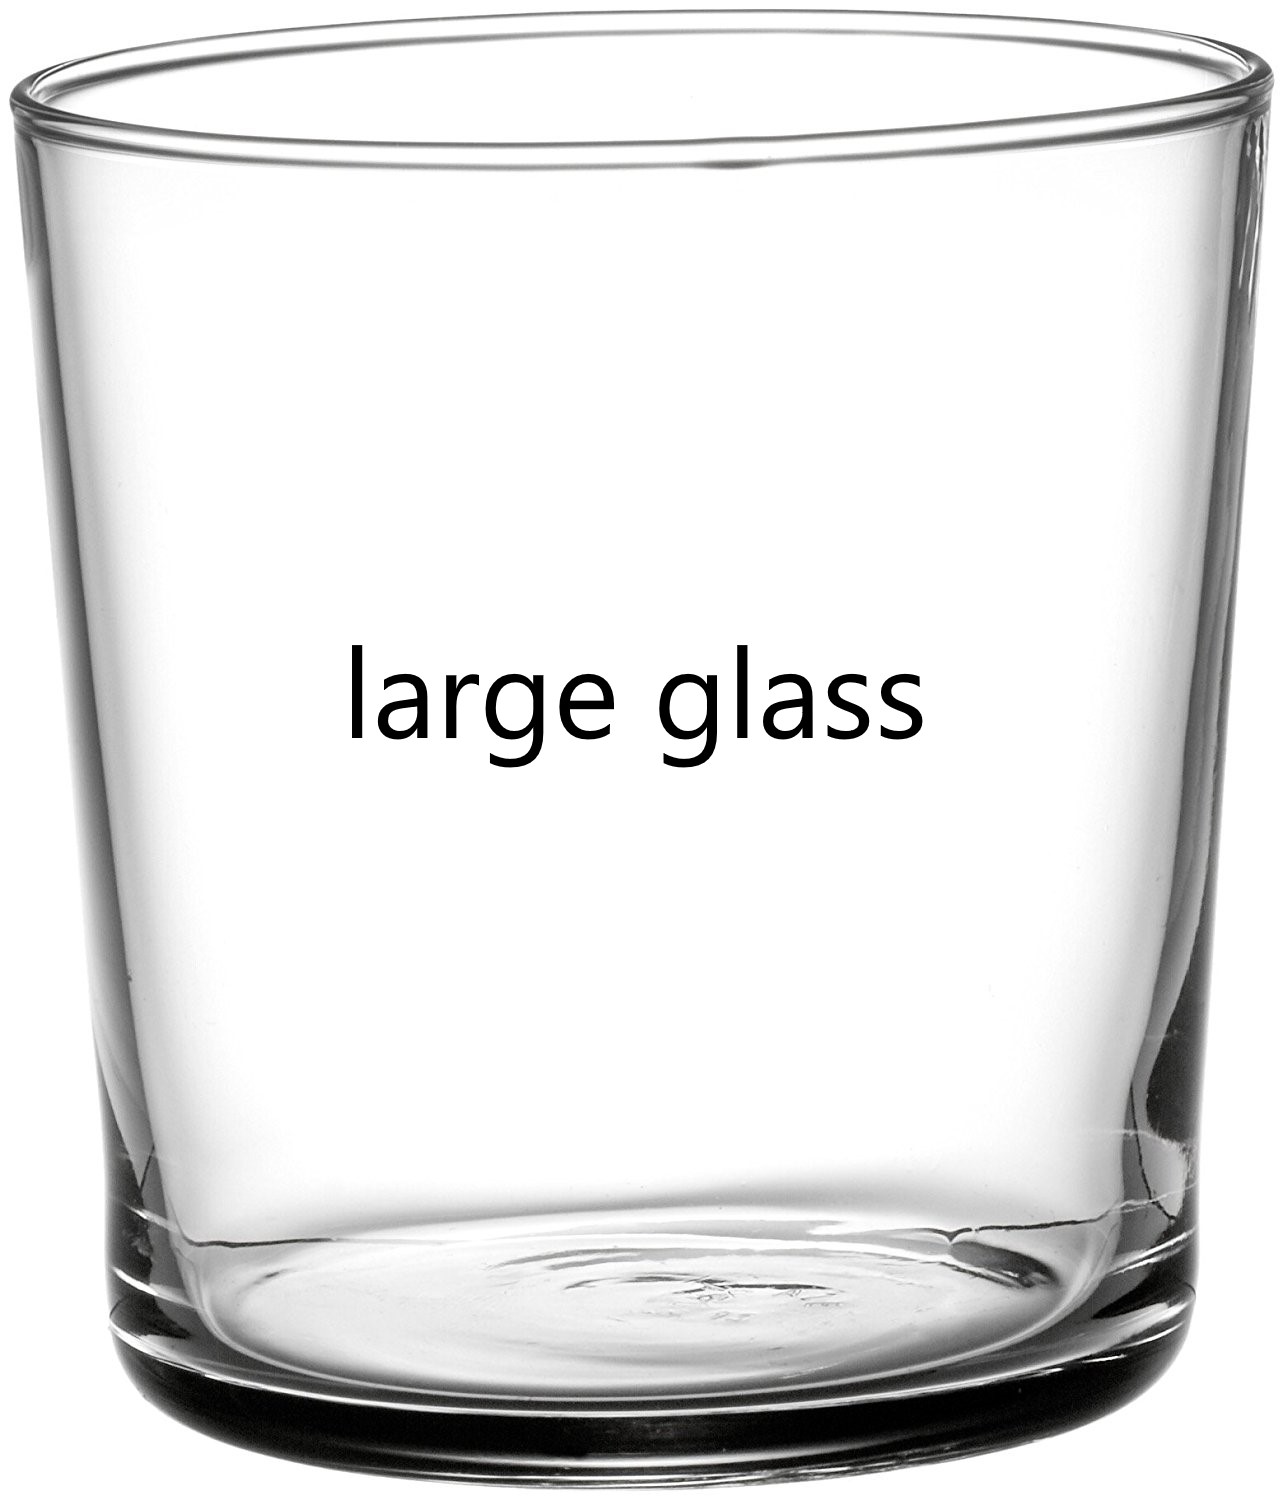 Large glass